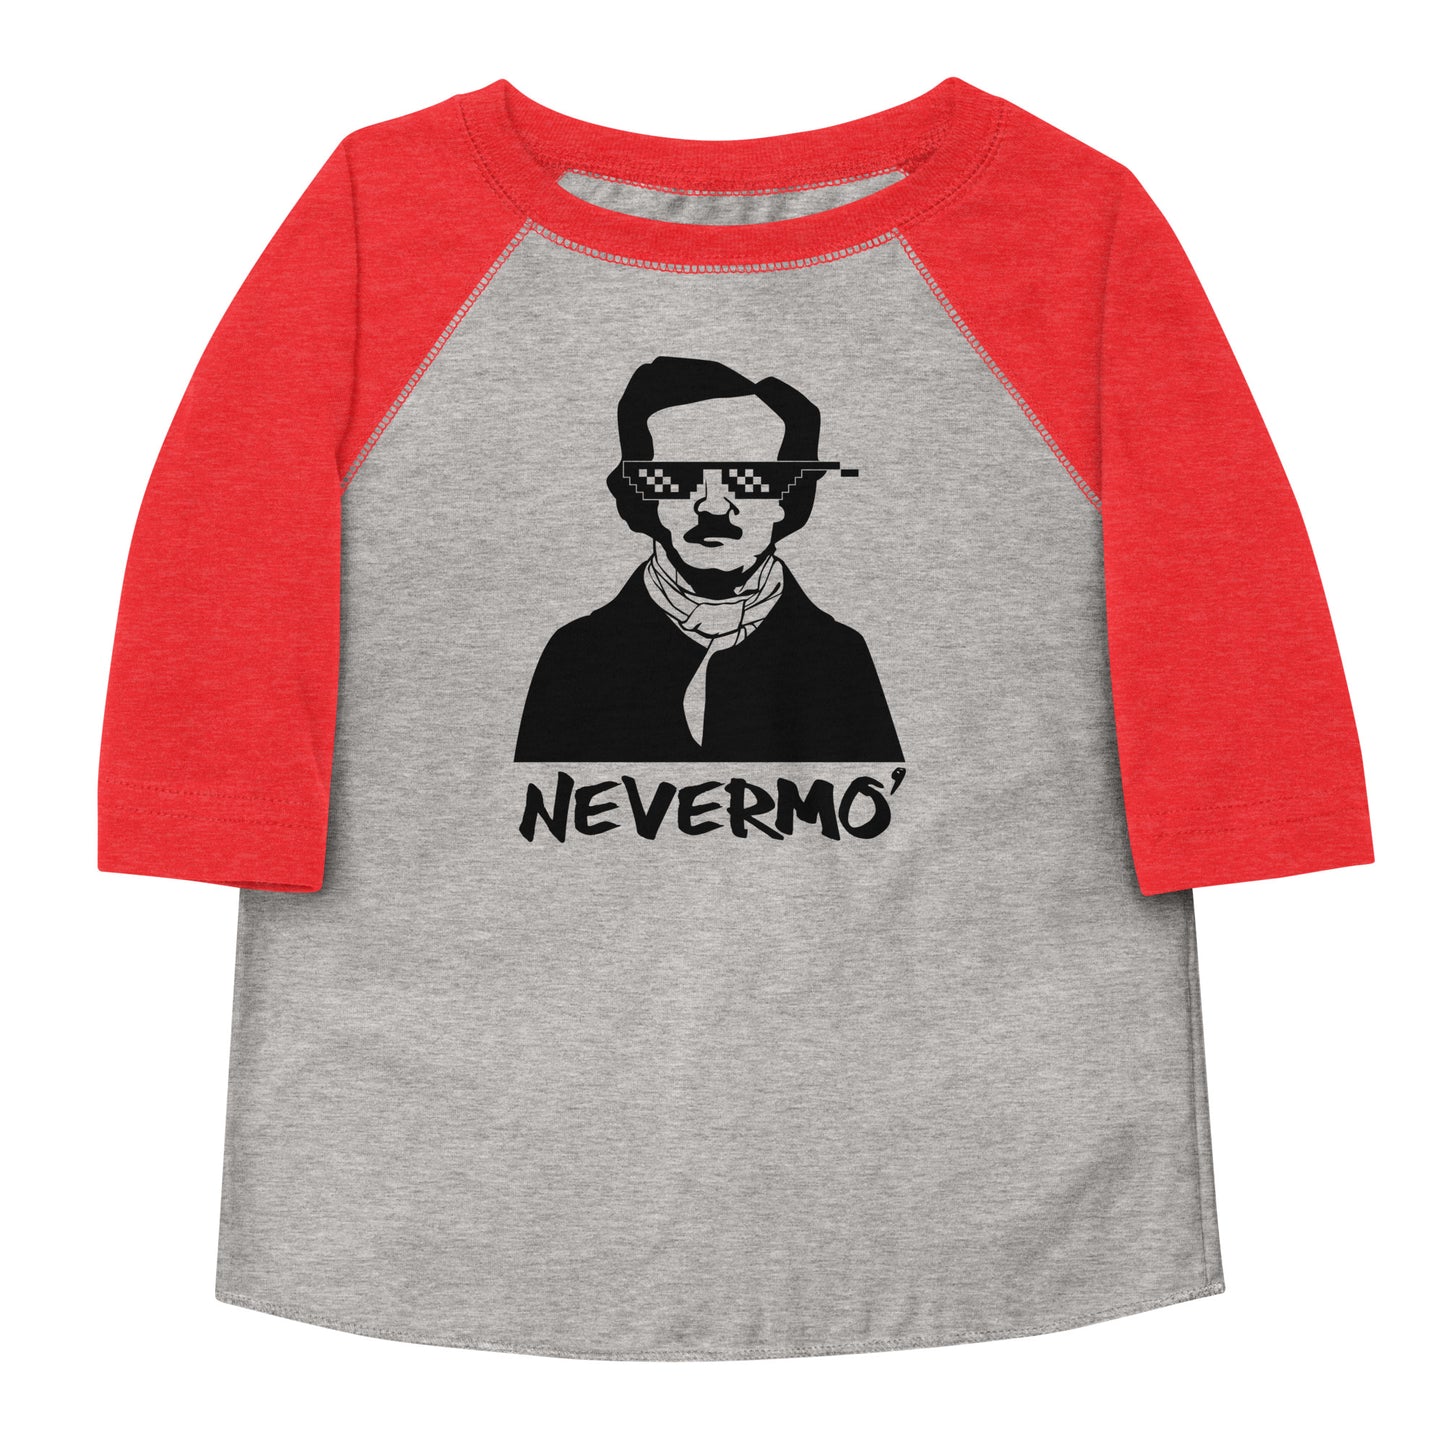 Edgar Allan Poe "Nevermo" Toddler baseball shirt - Vintage Heather Vintage Red Front